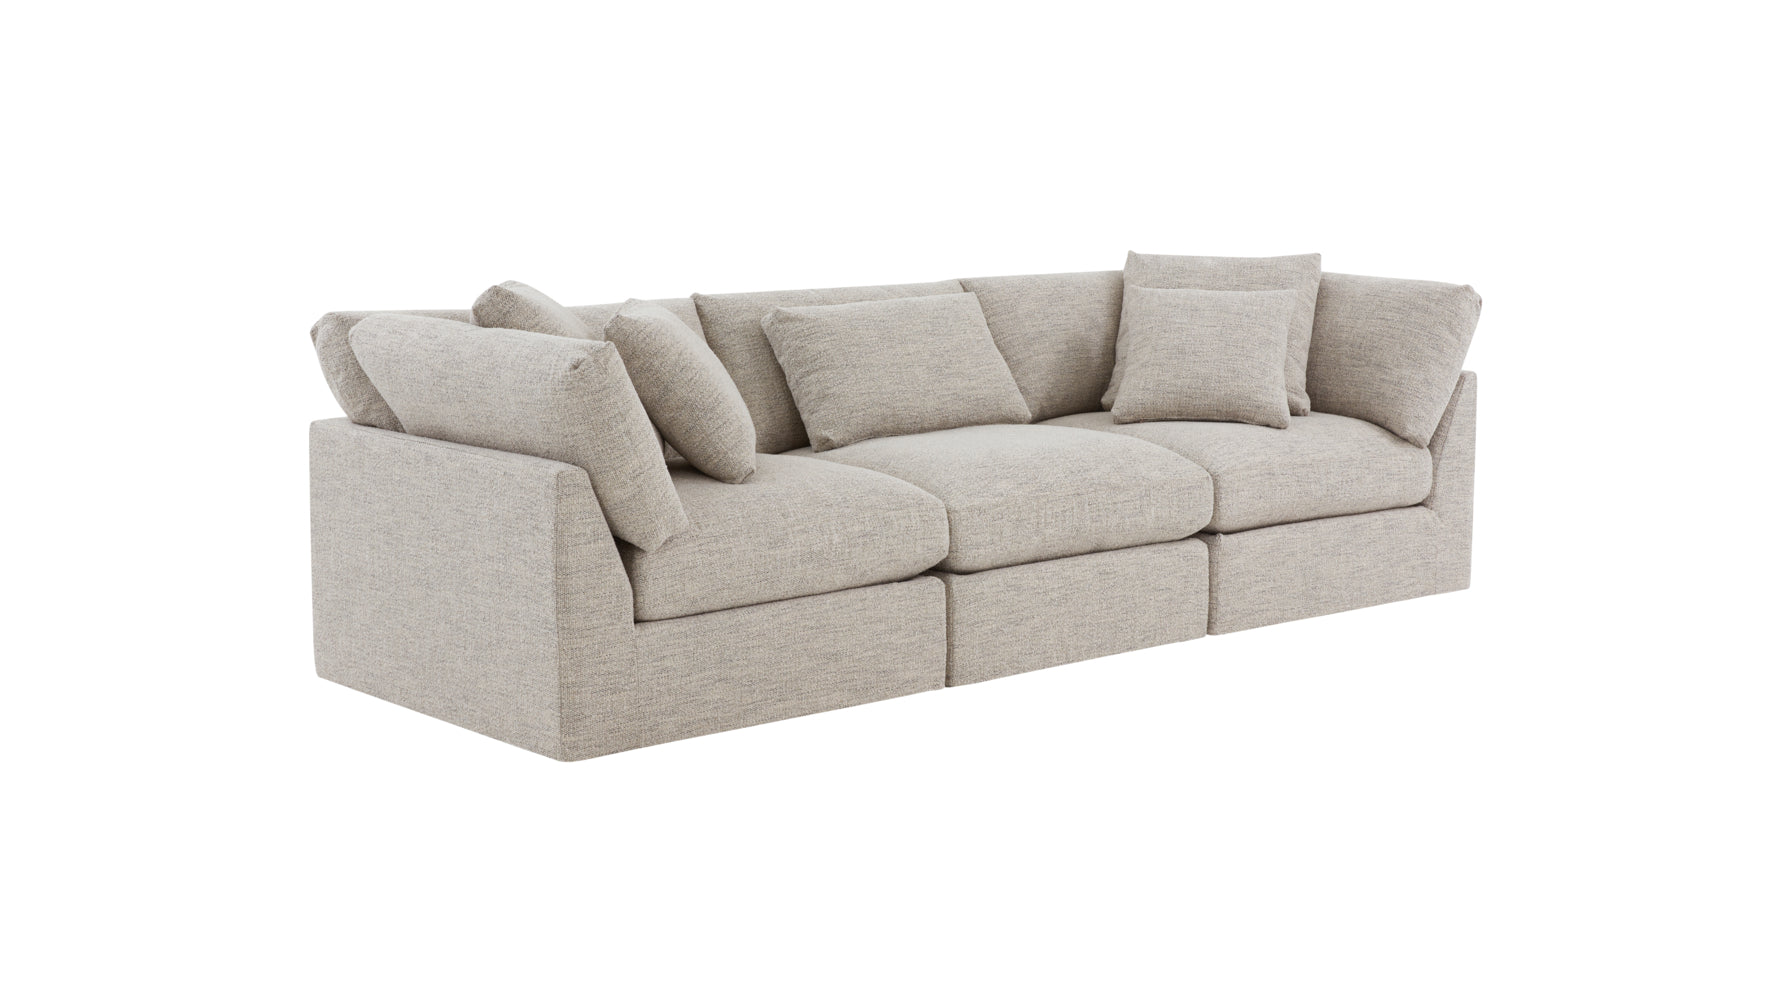 Get Together™ 3-Piece Modular Sofa, Large, Oatmeal - Image 2